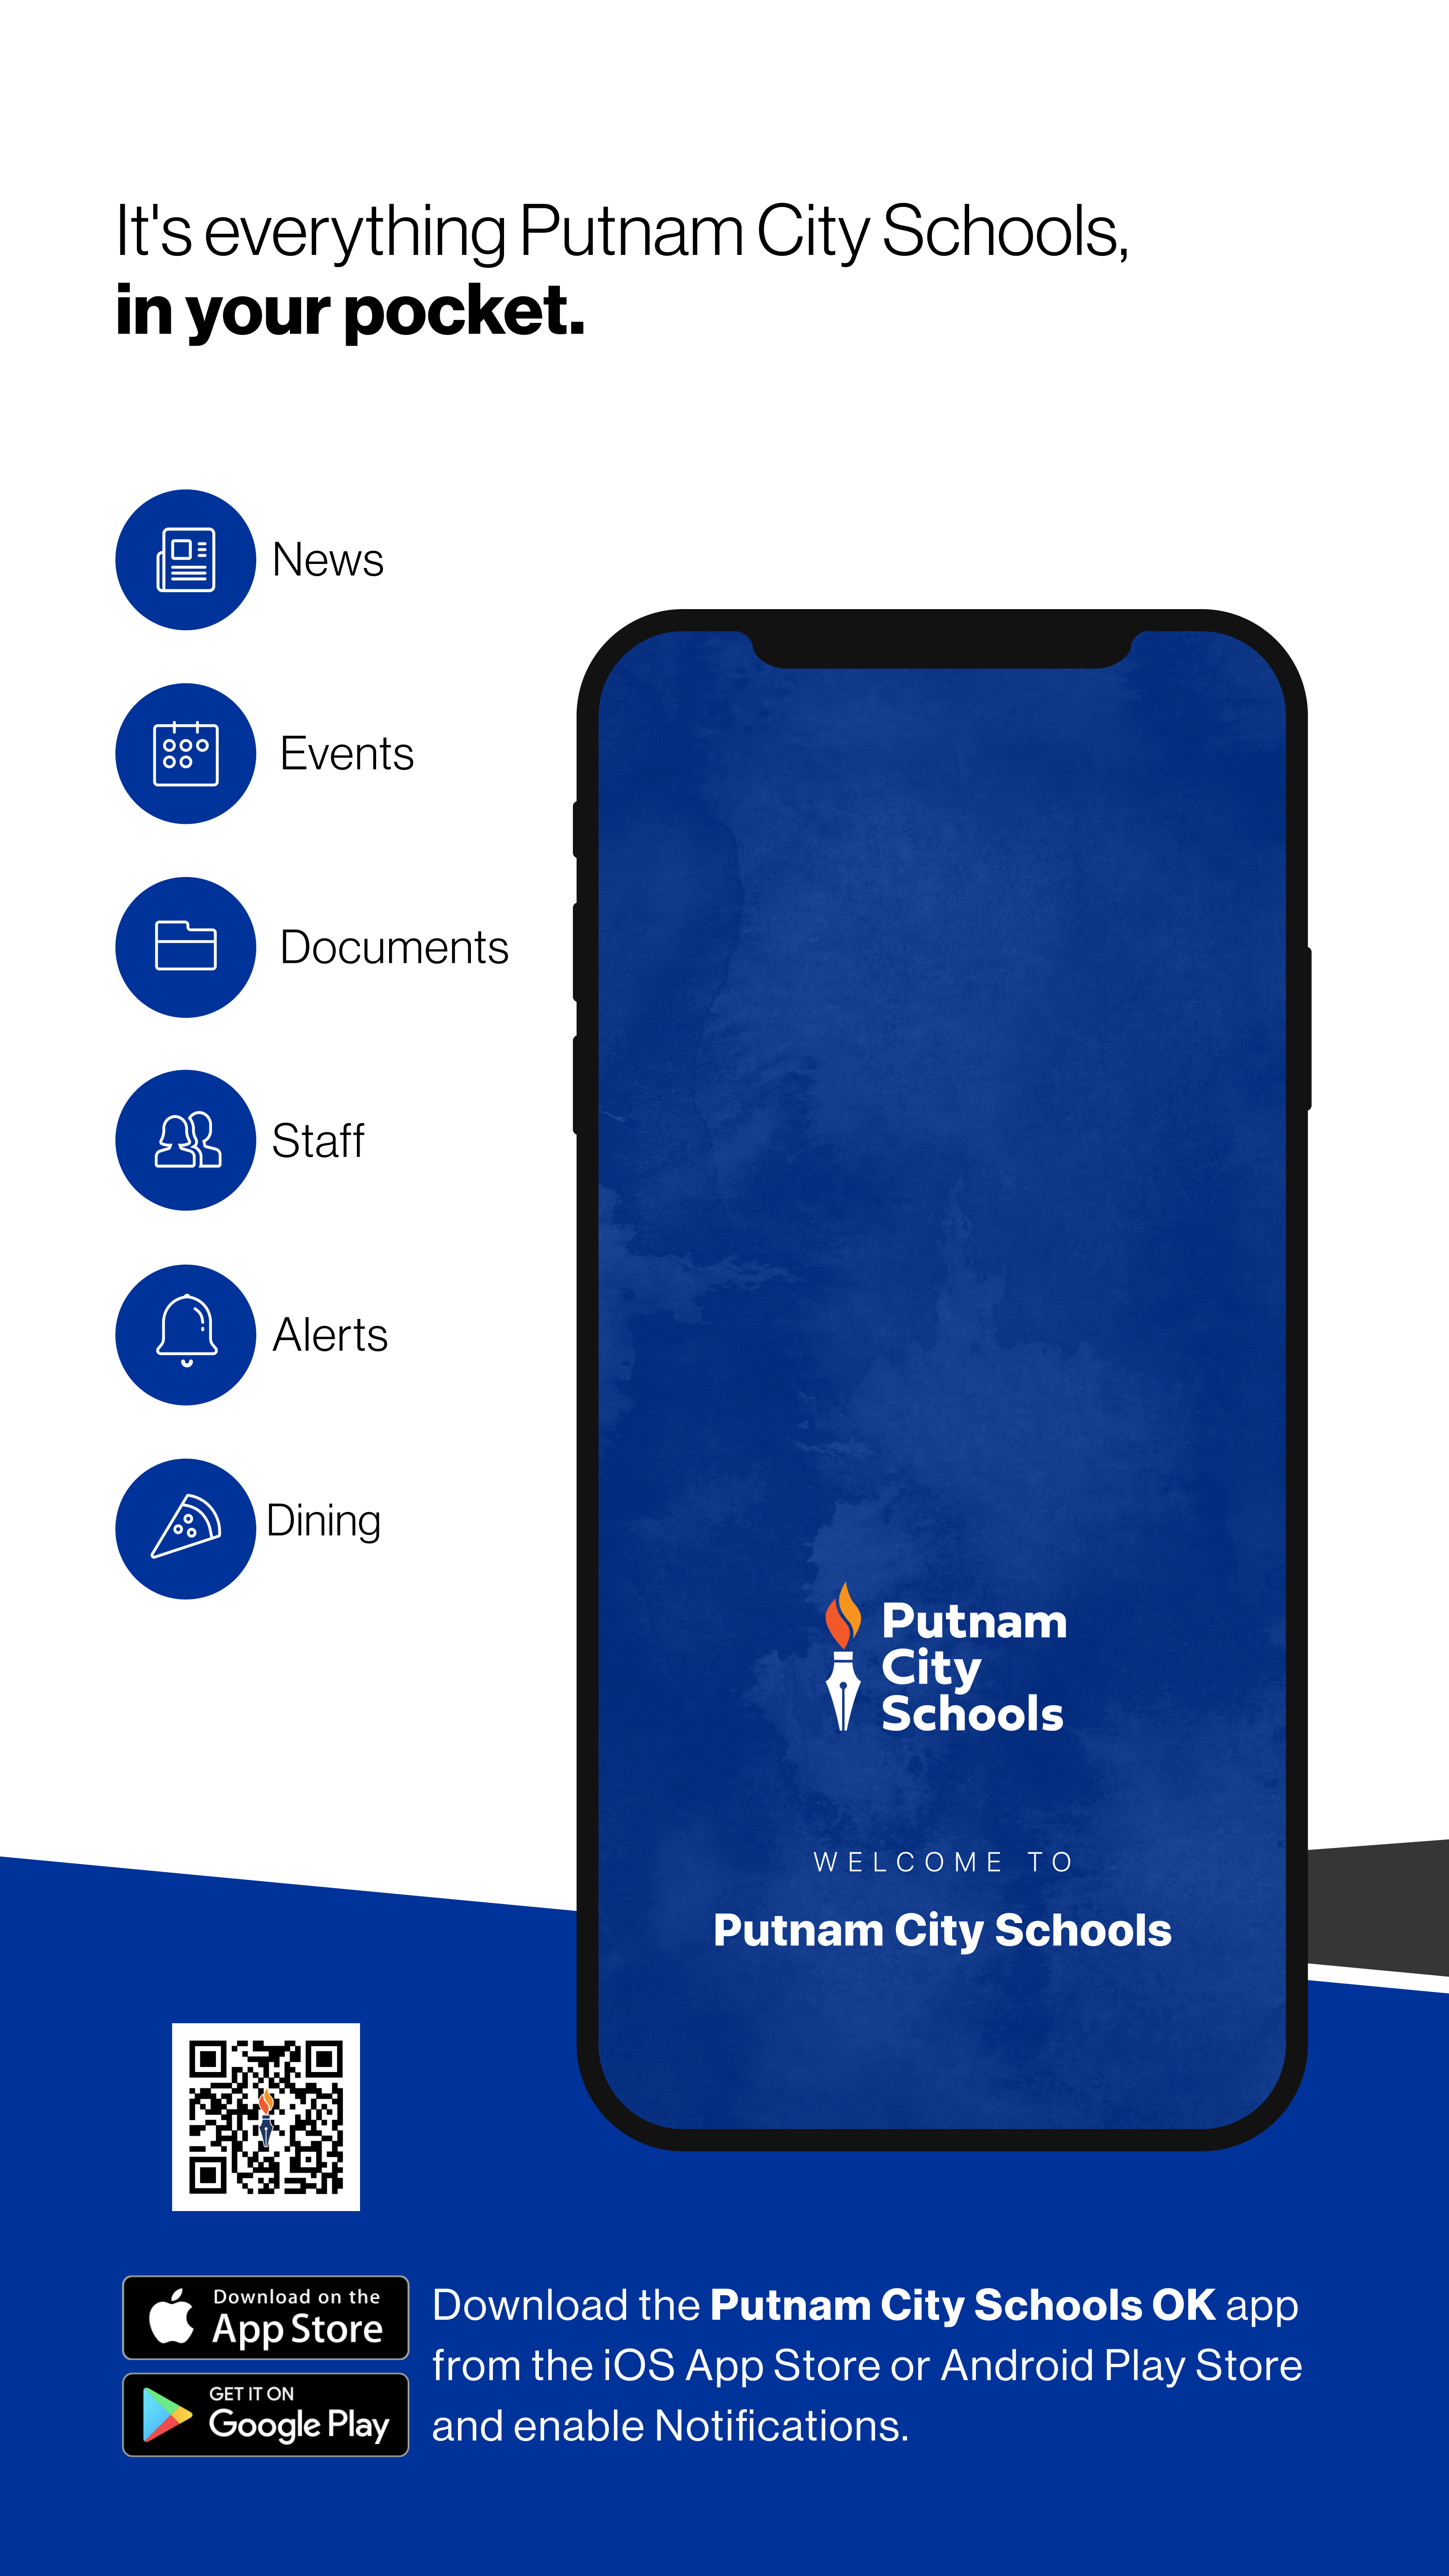 Download the Putnam City app